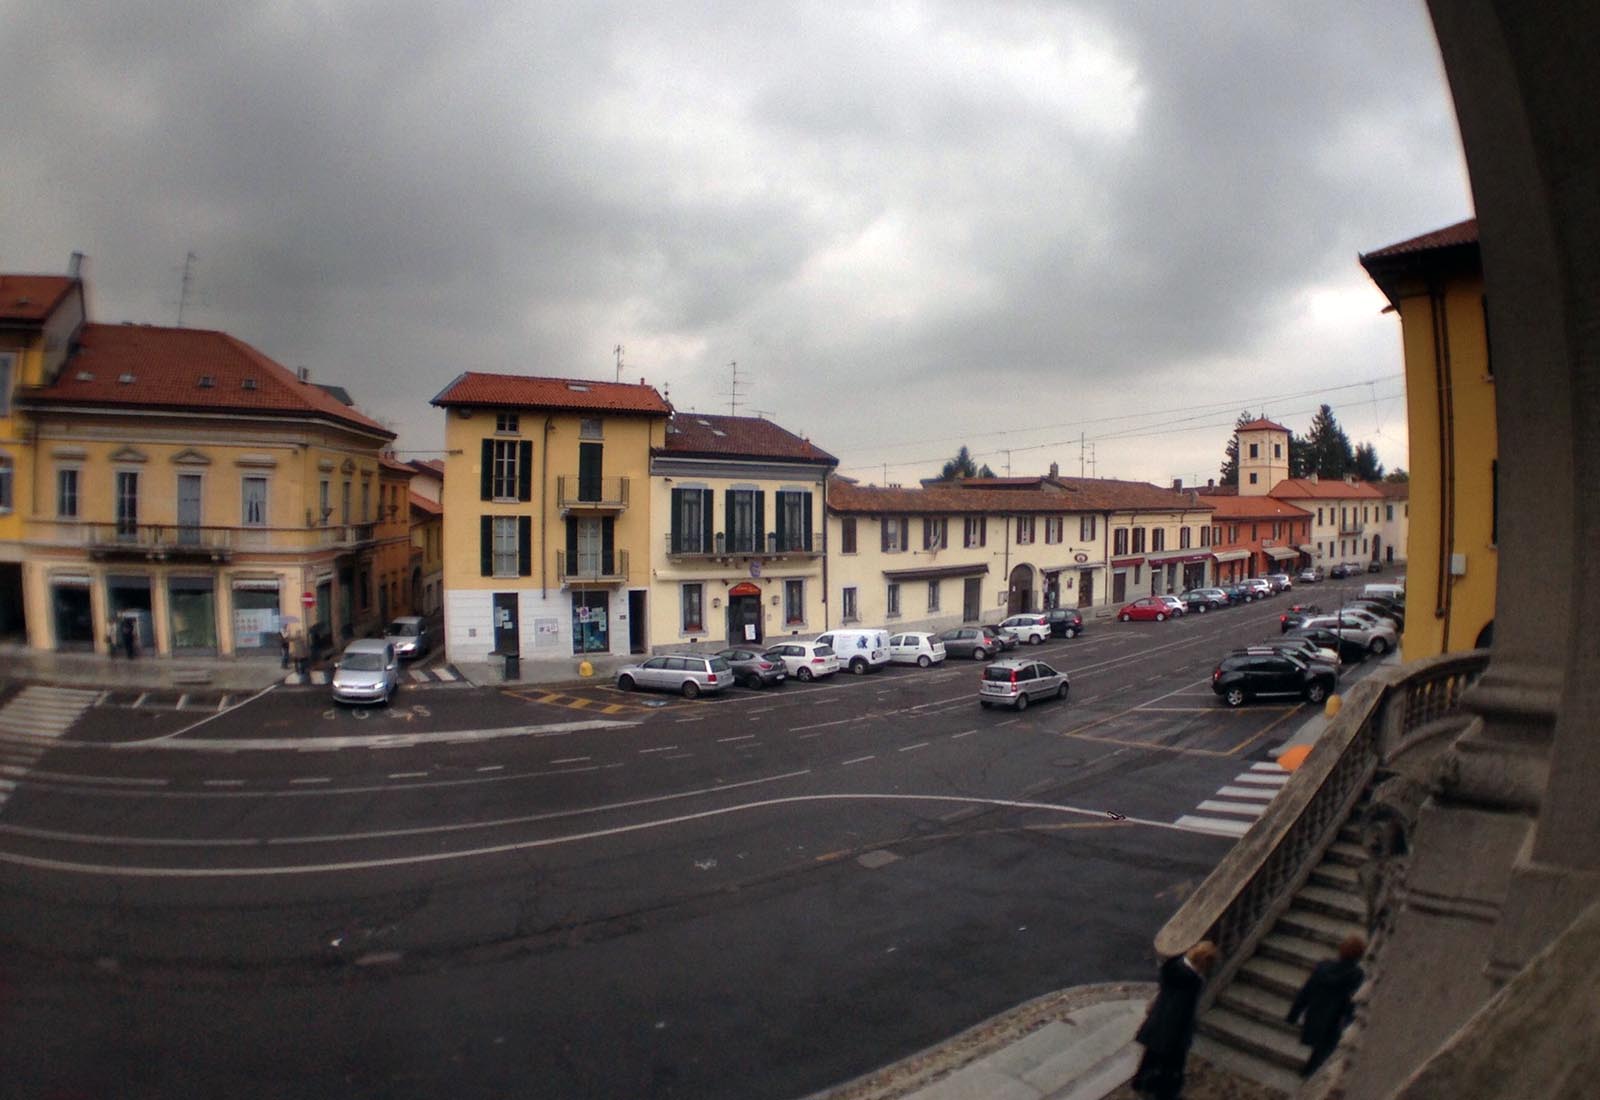 Piazza Libertà in Appiano Gentile - View